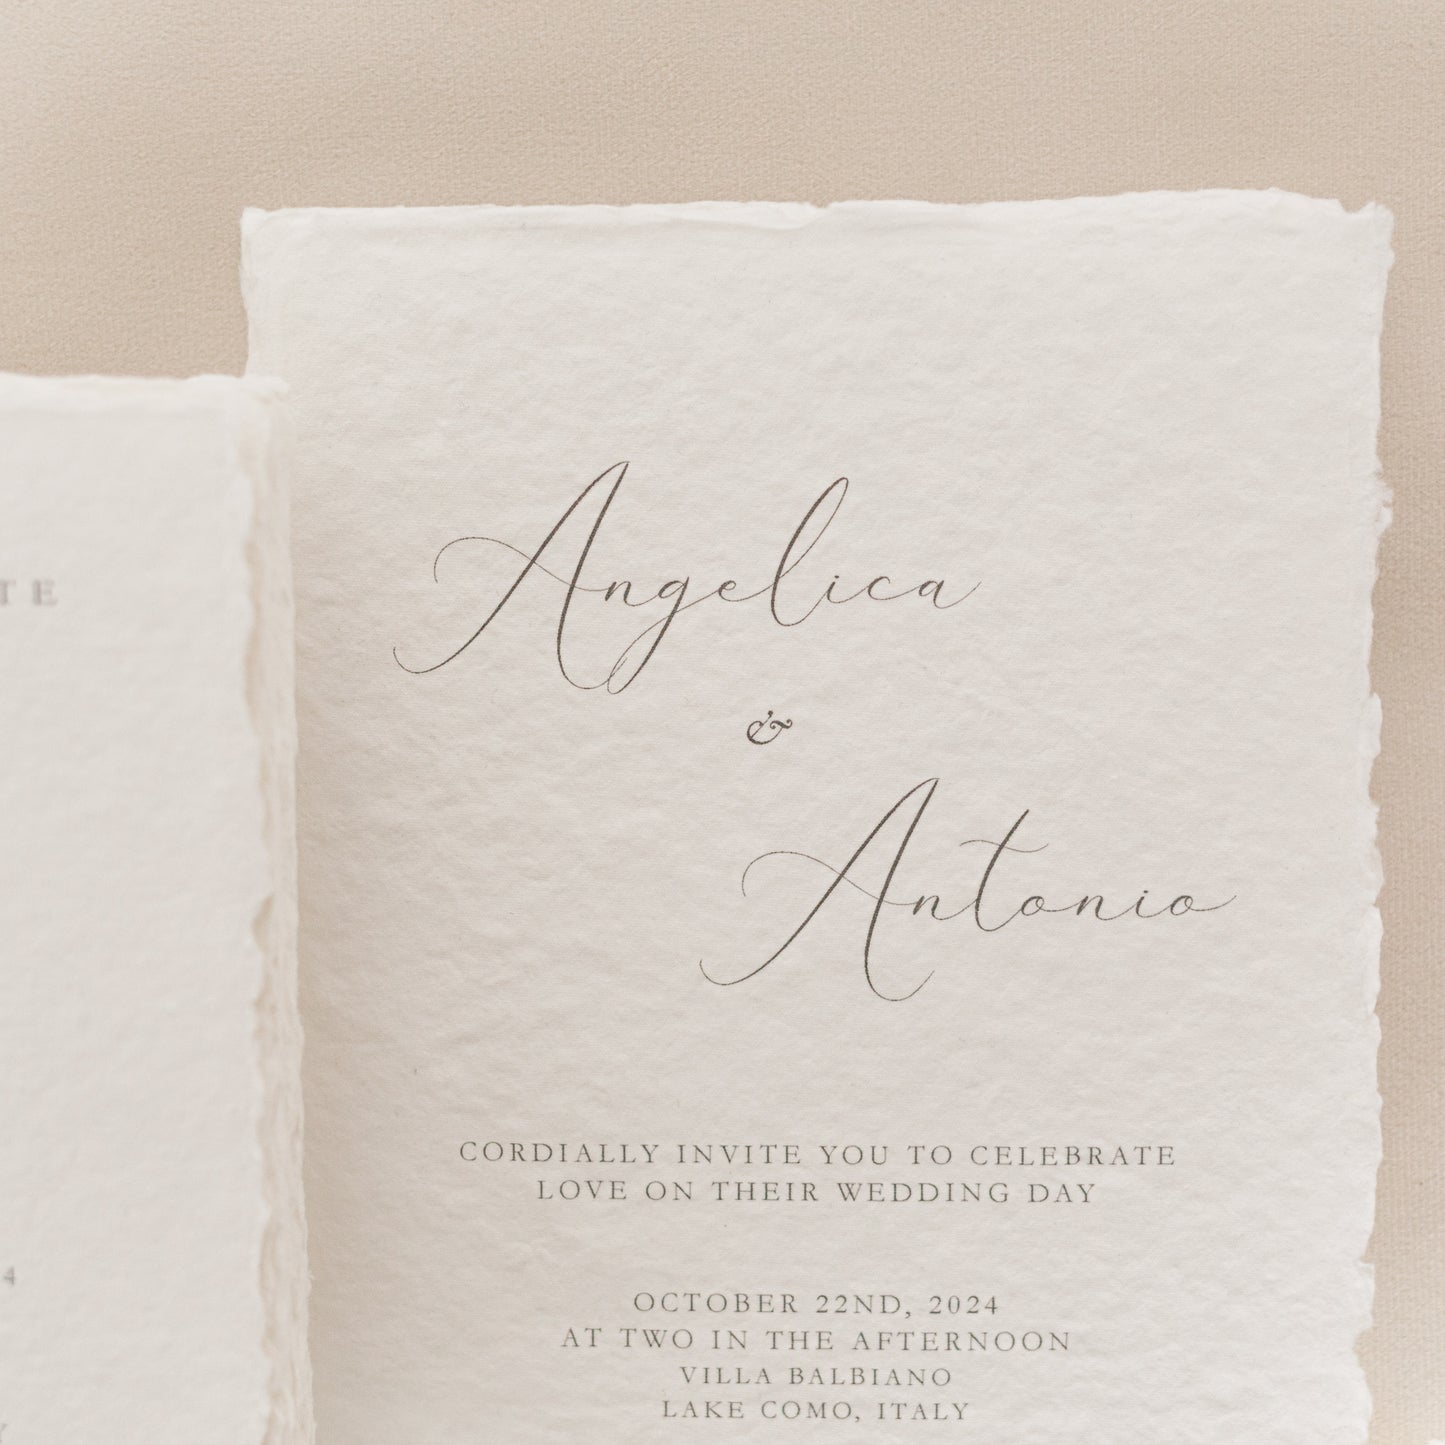 Angelica Wedding Invitation